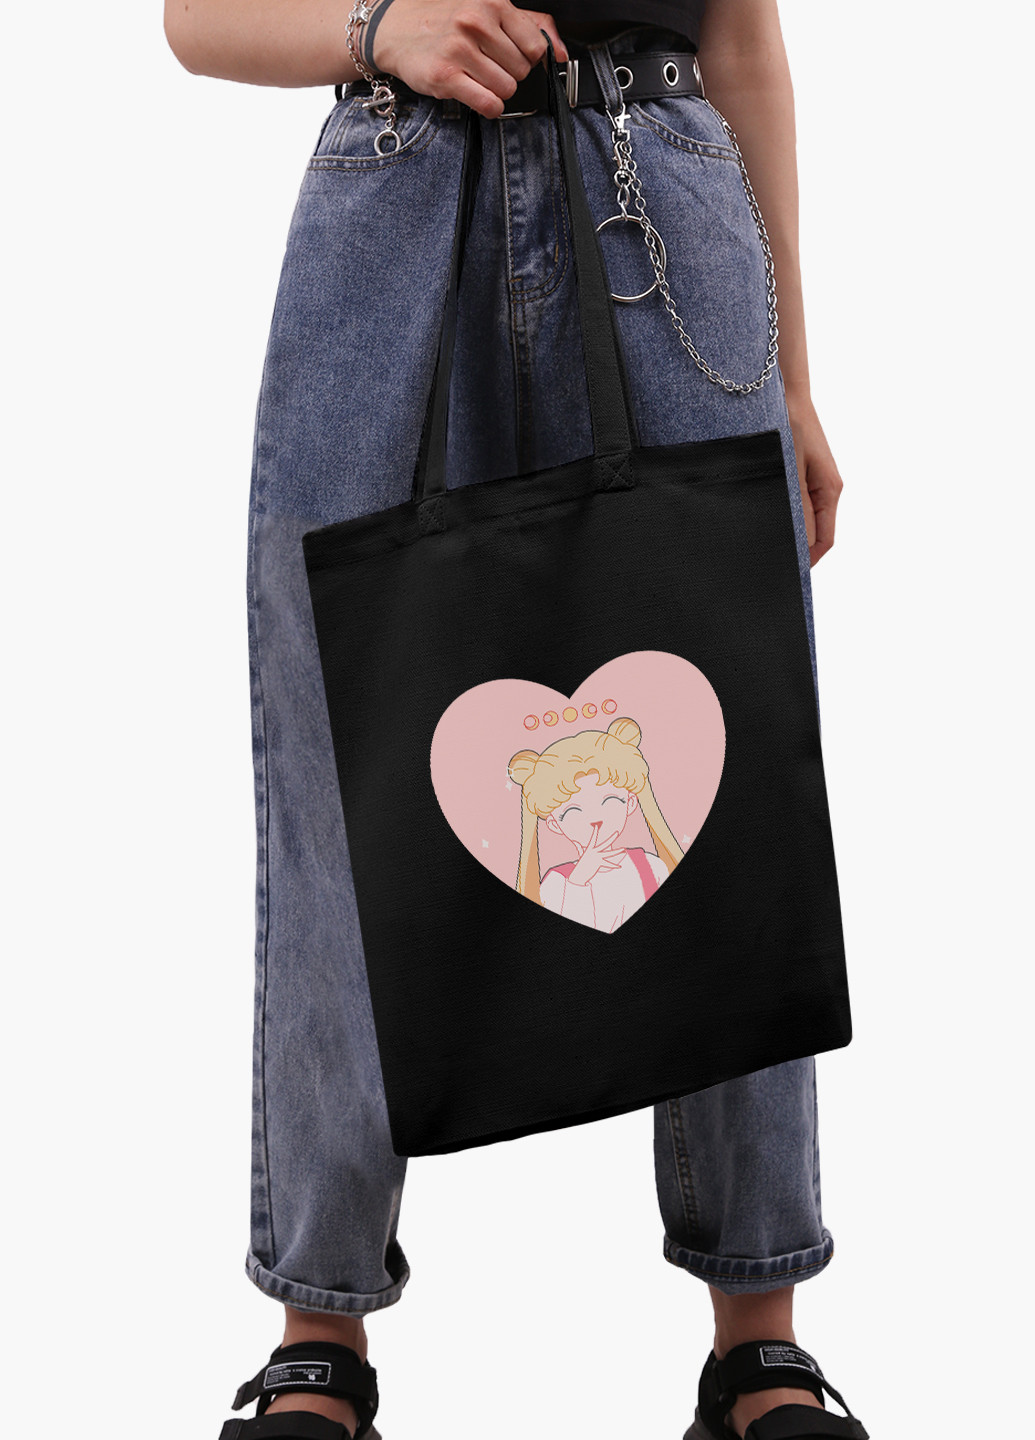 Эко сумка шоппер белая Луна Кошки Сейлор Мун (anime Sailor Moon Cats) (9227-2922-BK-1) экосумка шопер 41*35 см MobiPrint (224806119)